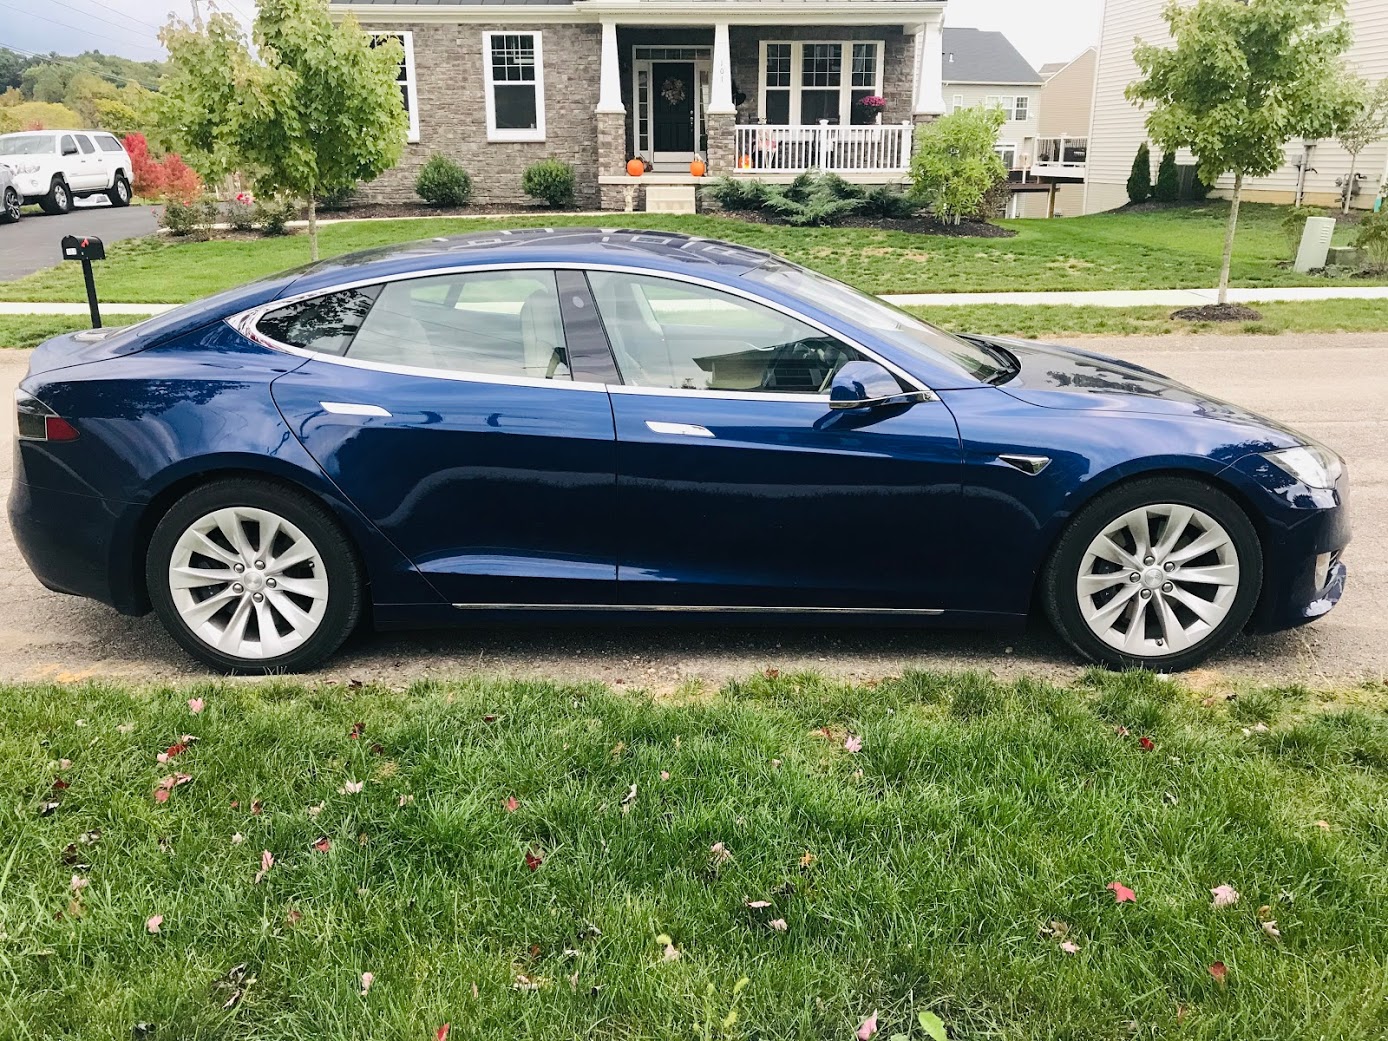 2017 / Model S / 75D / Deep Blue Metallic - e836d | Only Used Tesla